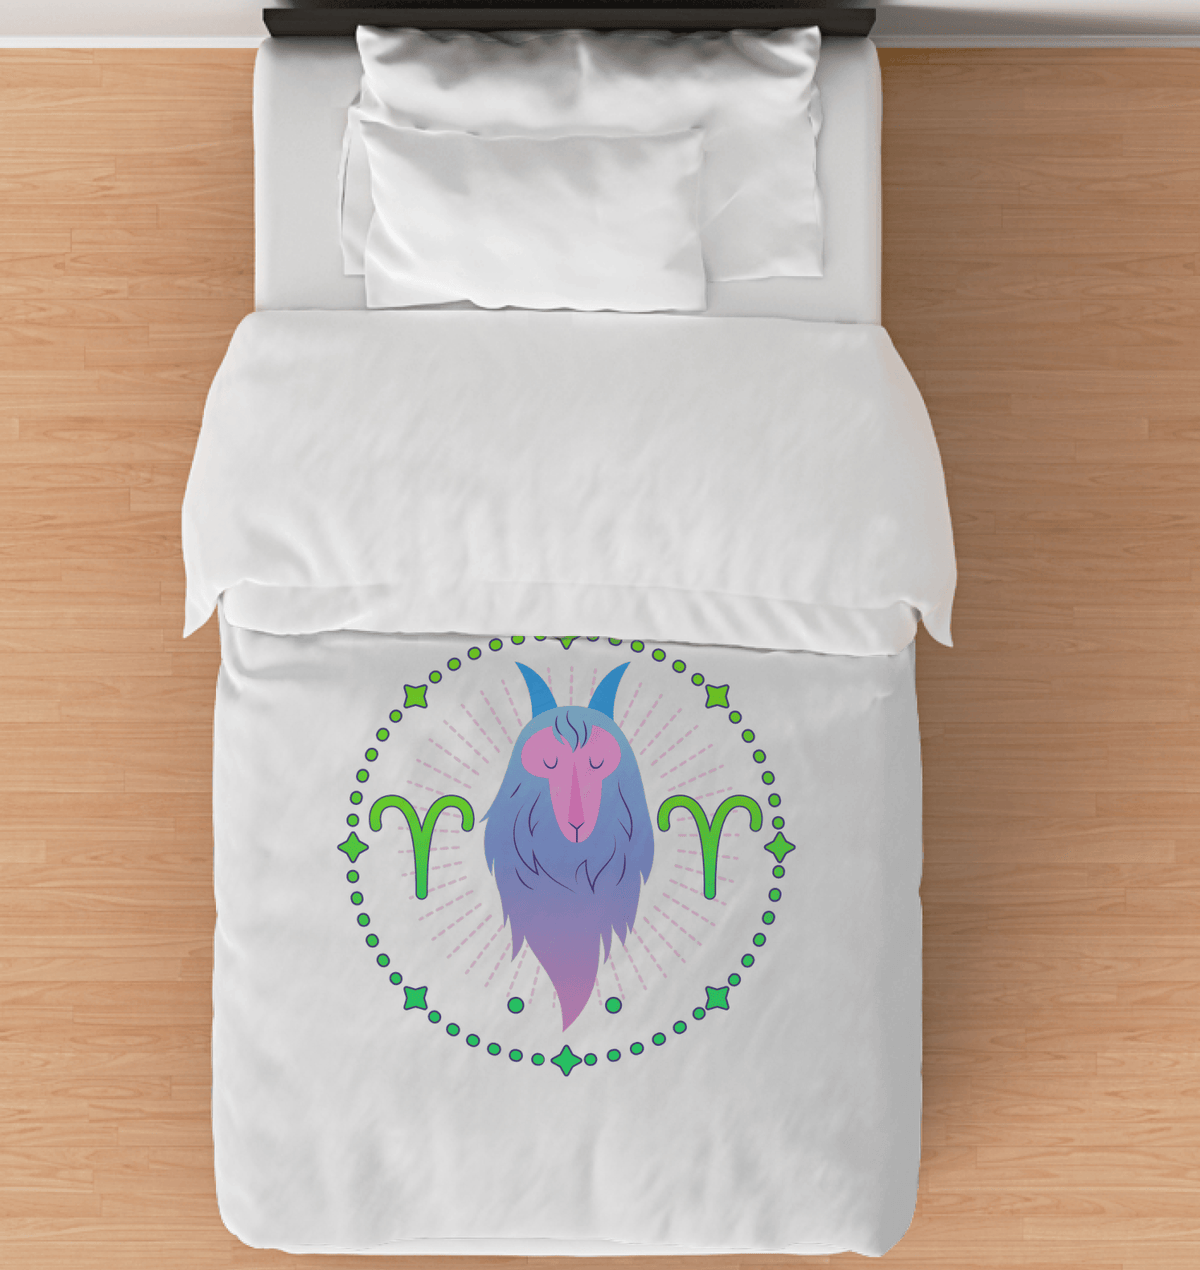 Aries Comforter Twin | Zodiac Series 1 - Beyond T-shirts